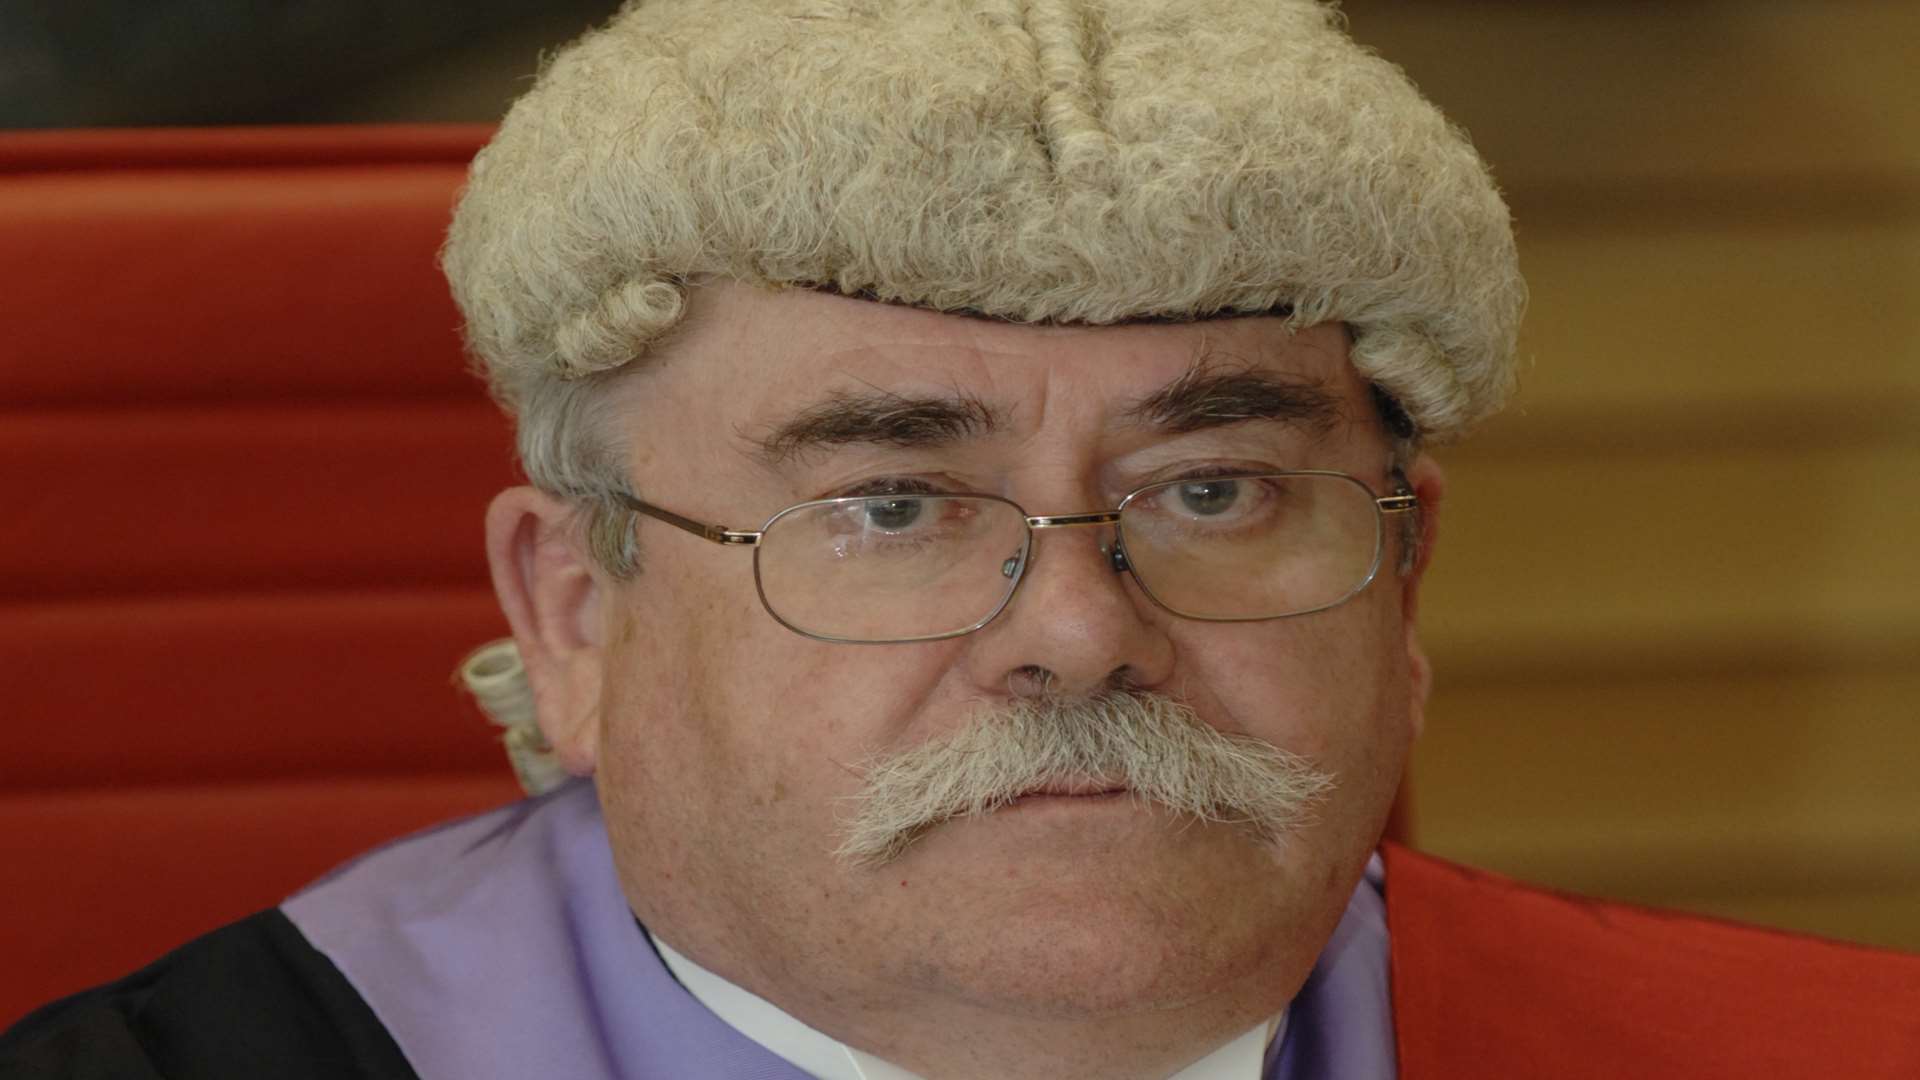 Judge Michael Carroll